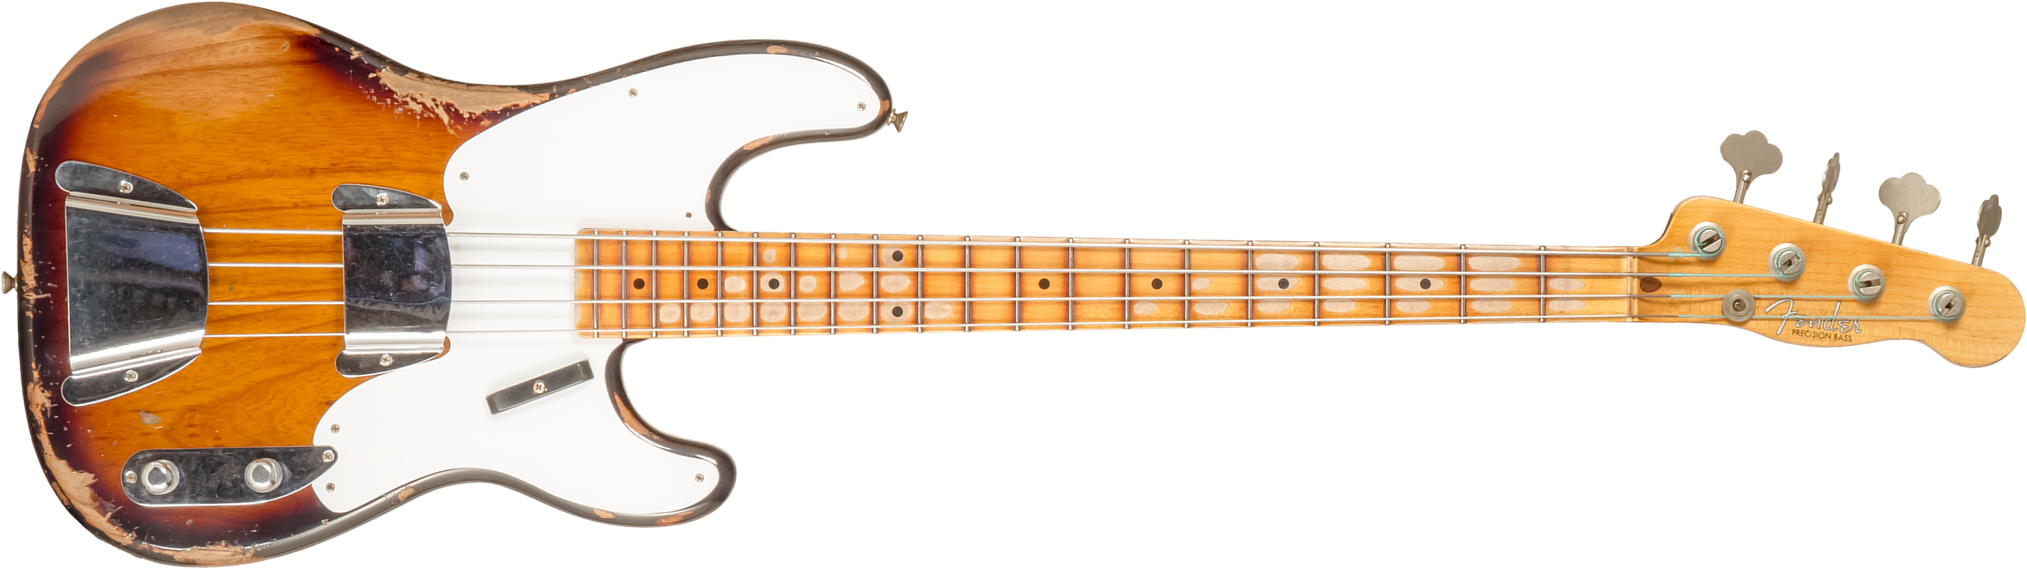 Fender Custom Shop Precision Bass 1955 Mn #r133839 - Heavy Relic 2-color Sunburst - Solid body elektrische bas - Main picture